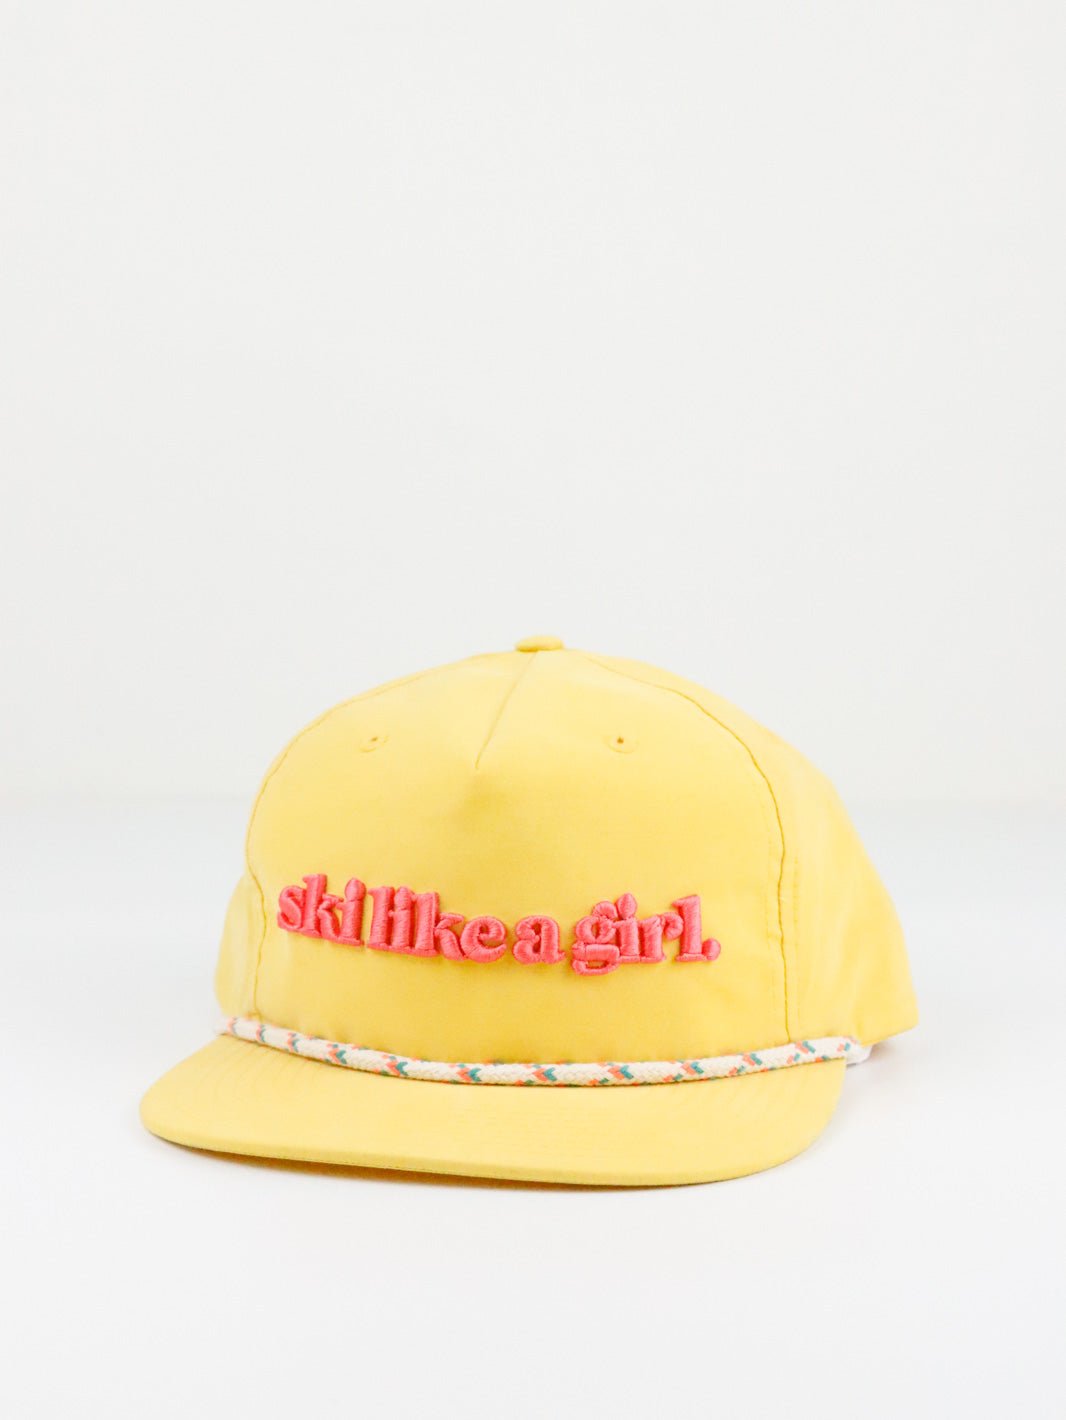 Ski Like A Girl Yellow Nylon Embroidered Hat - Heyday